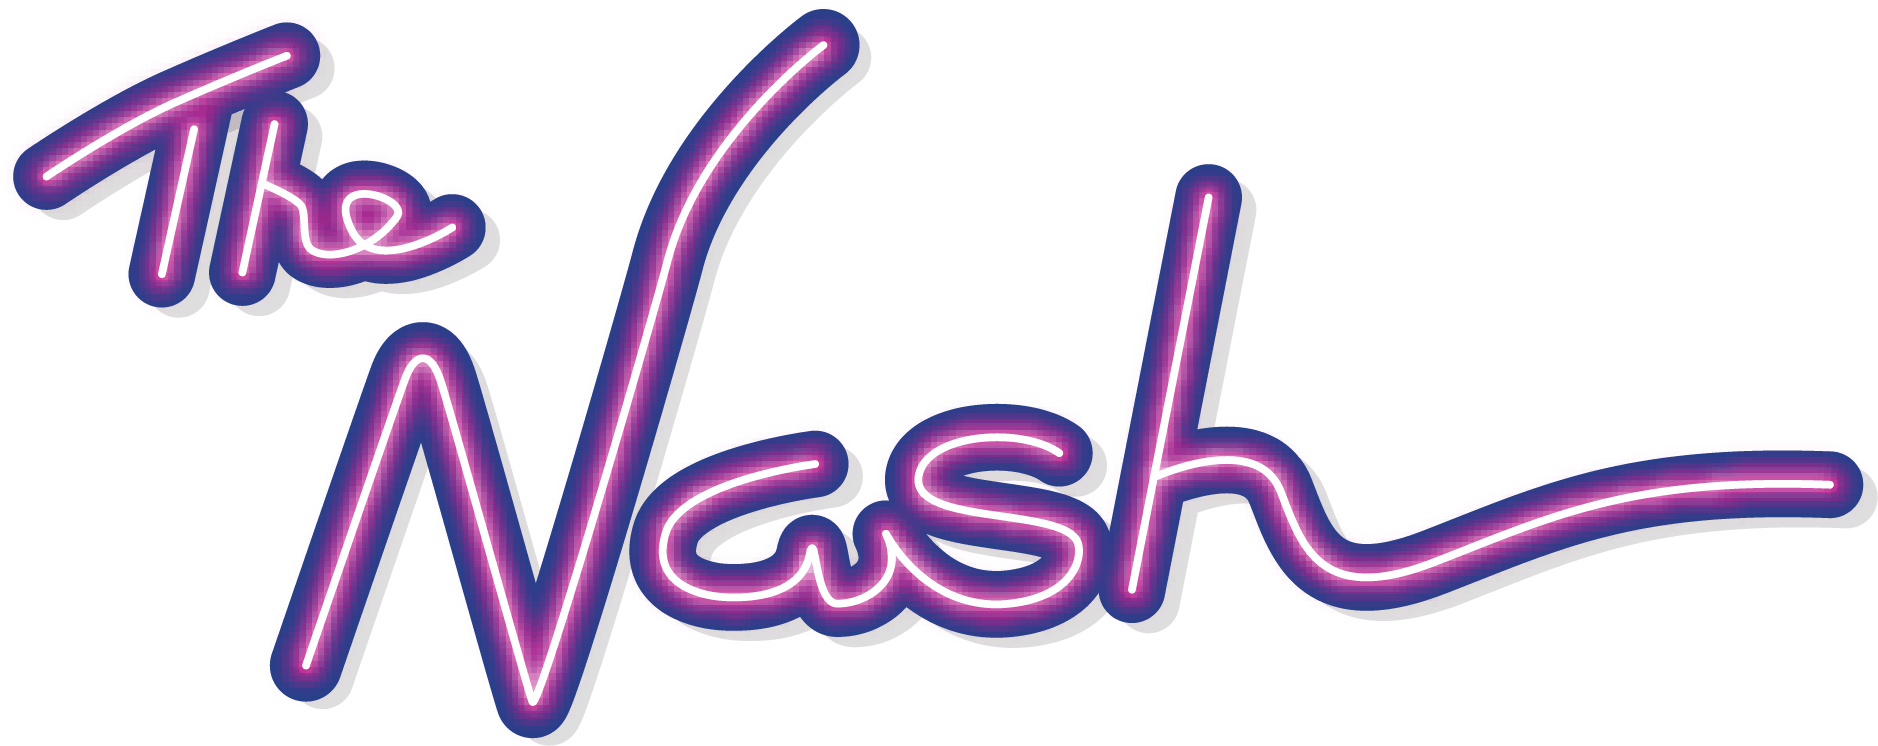 Nash Store лого. Наш лого. Nash logo. 209 Logo. Special thanks to